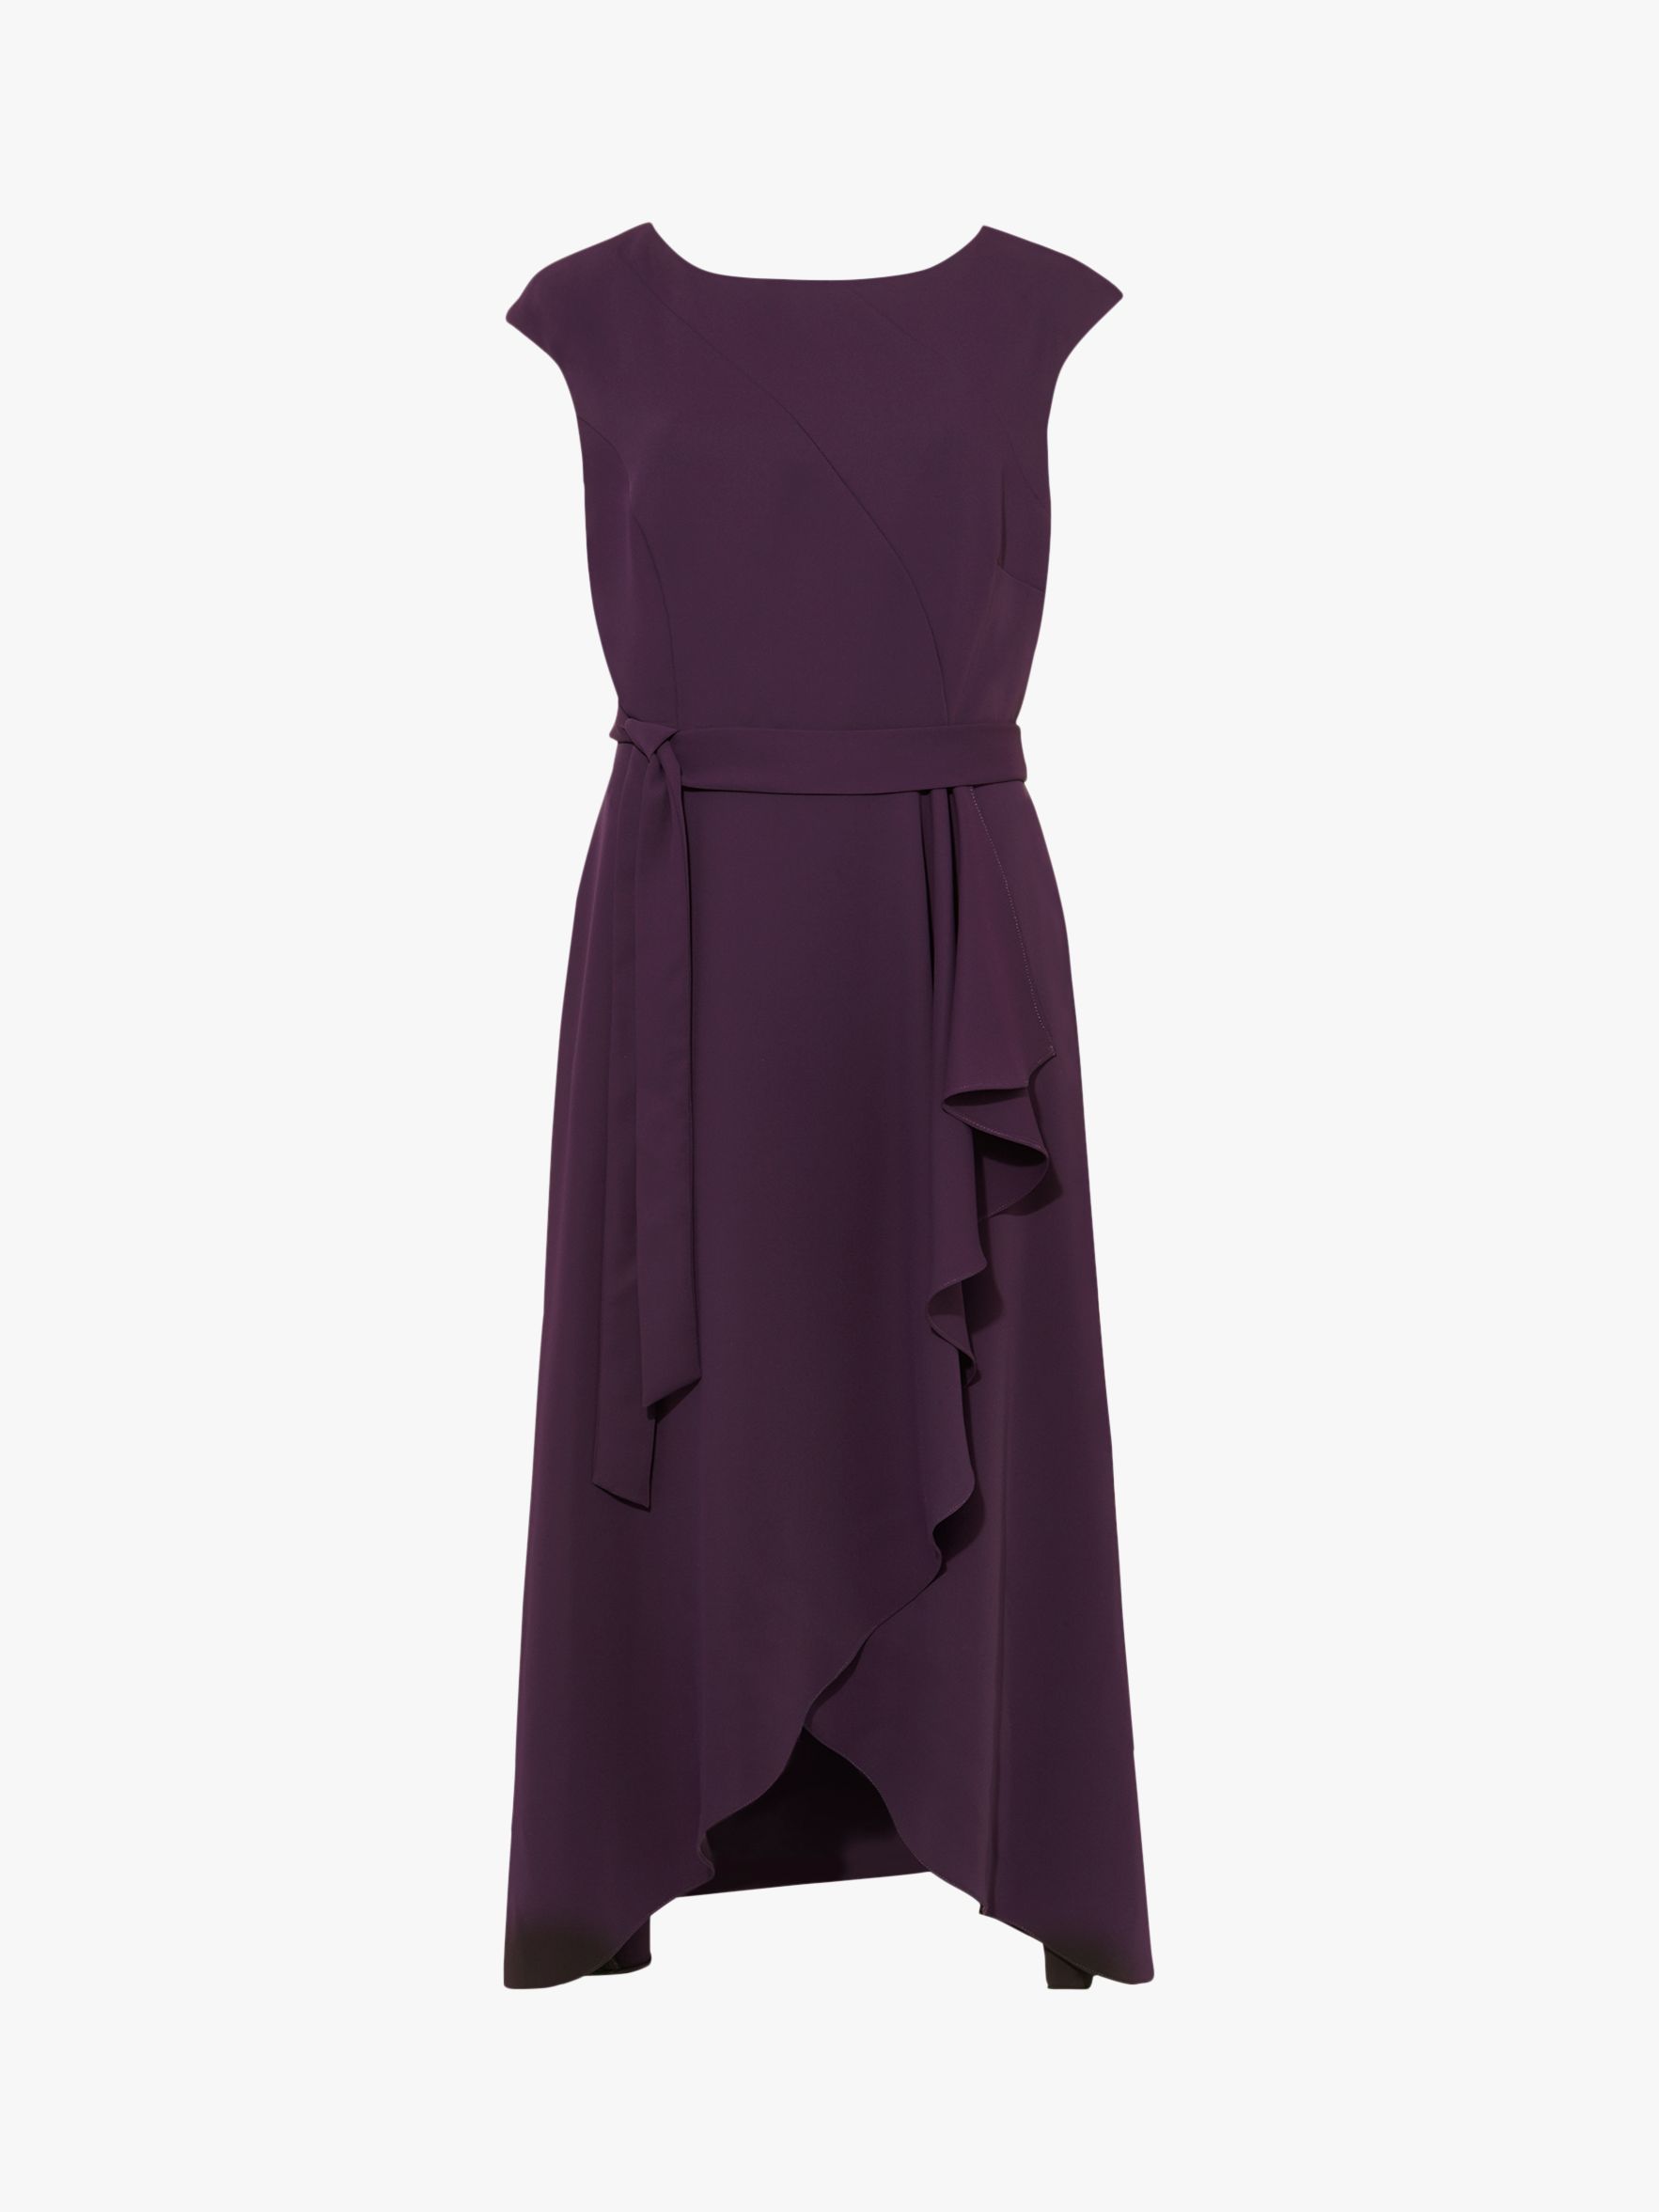 phase eight purple rushelle dress